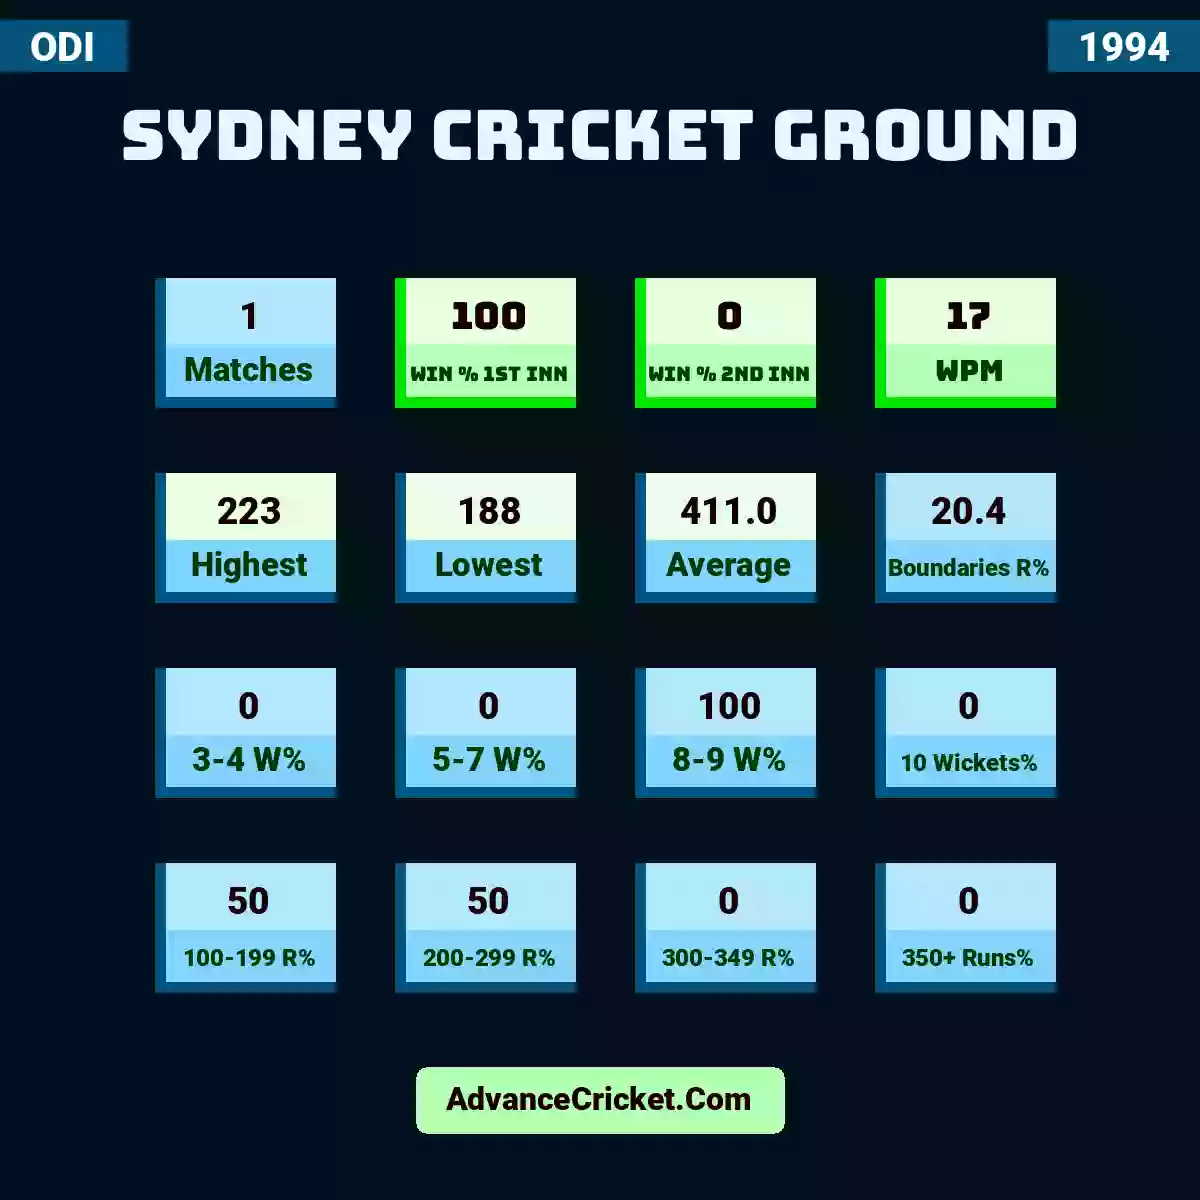 Image showing Sydney Cricket Ground with Matches: 1, Win % 1st Inn: 100, Win % 2nd Inn: 0, WPM: 17, Highest: 223, Lowest: 188, Average: 411.0, Boundaries R%: 20.4, 3-4 W%: 0, 5-7 W%: 0, 8-9 W%: 100, 10 Wickets%: 0, 100-199 R%: 50, 200-299 R%: 50, 300-349 R%: 0, 350+ Runs%: 0.